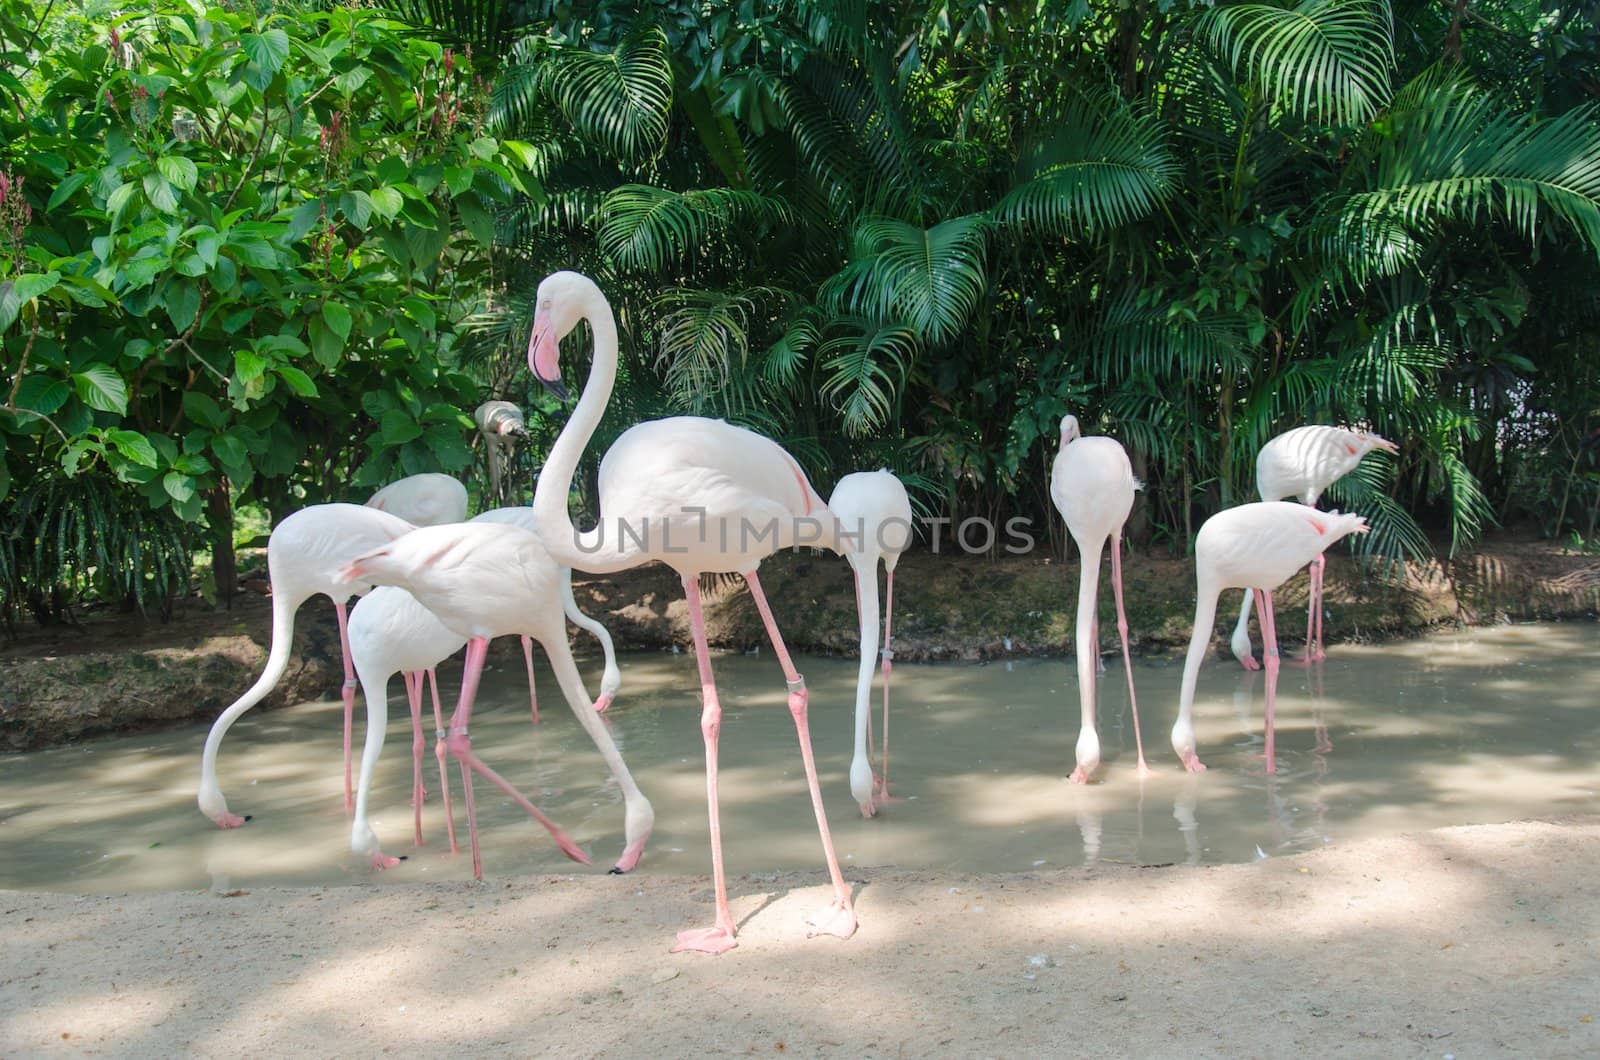 Flamingo by aoo3771